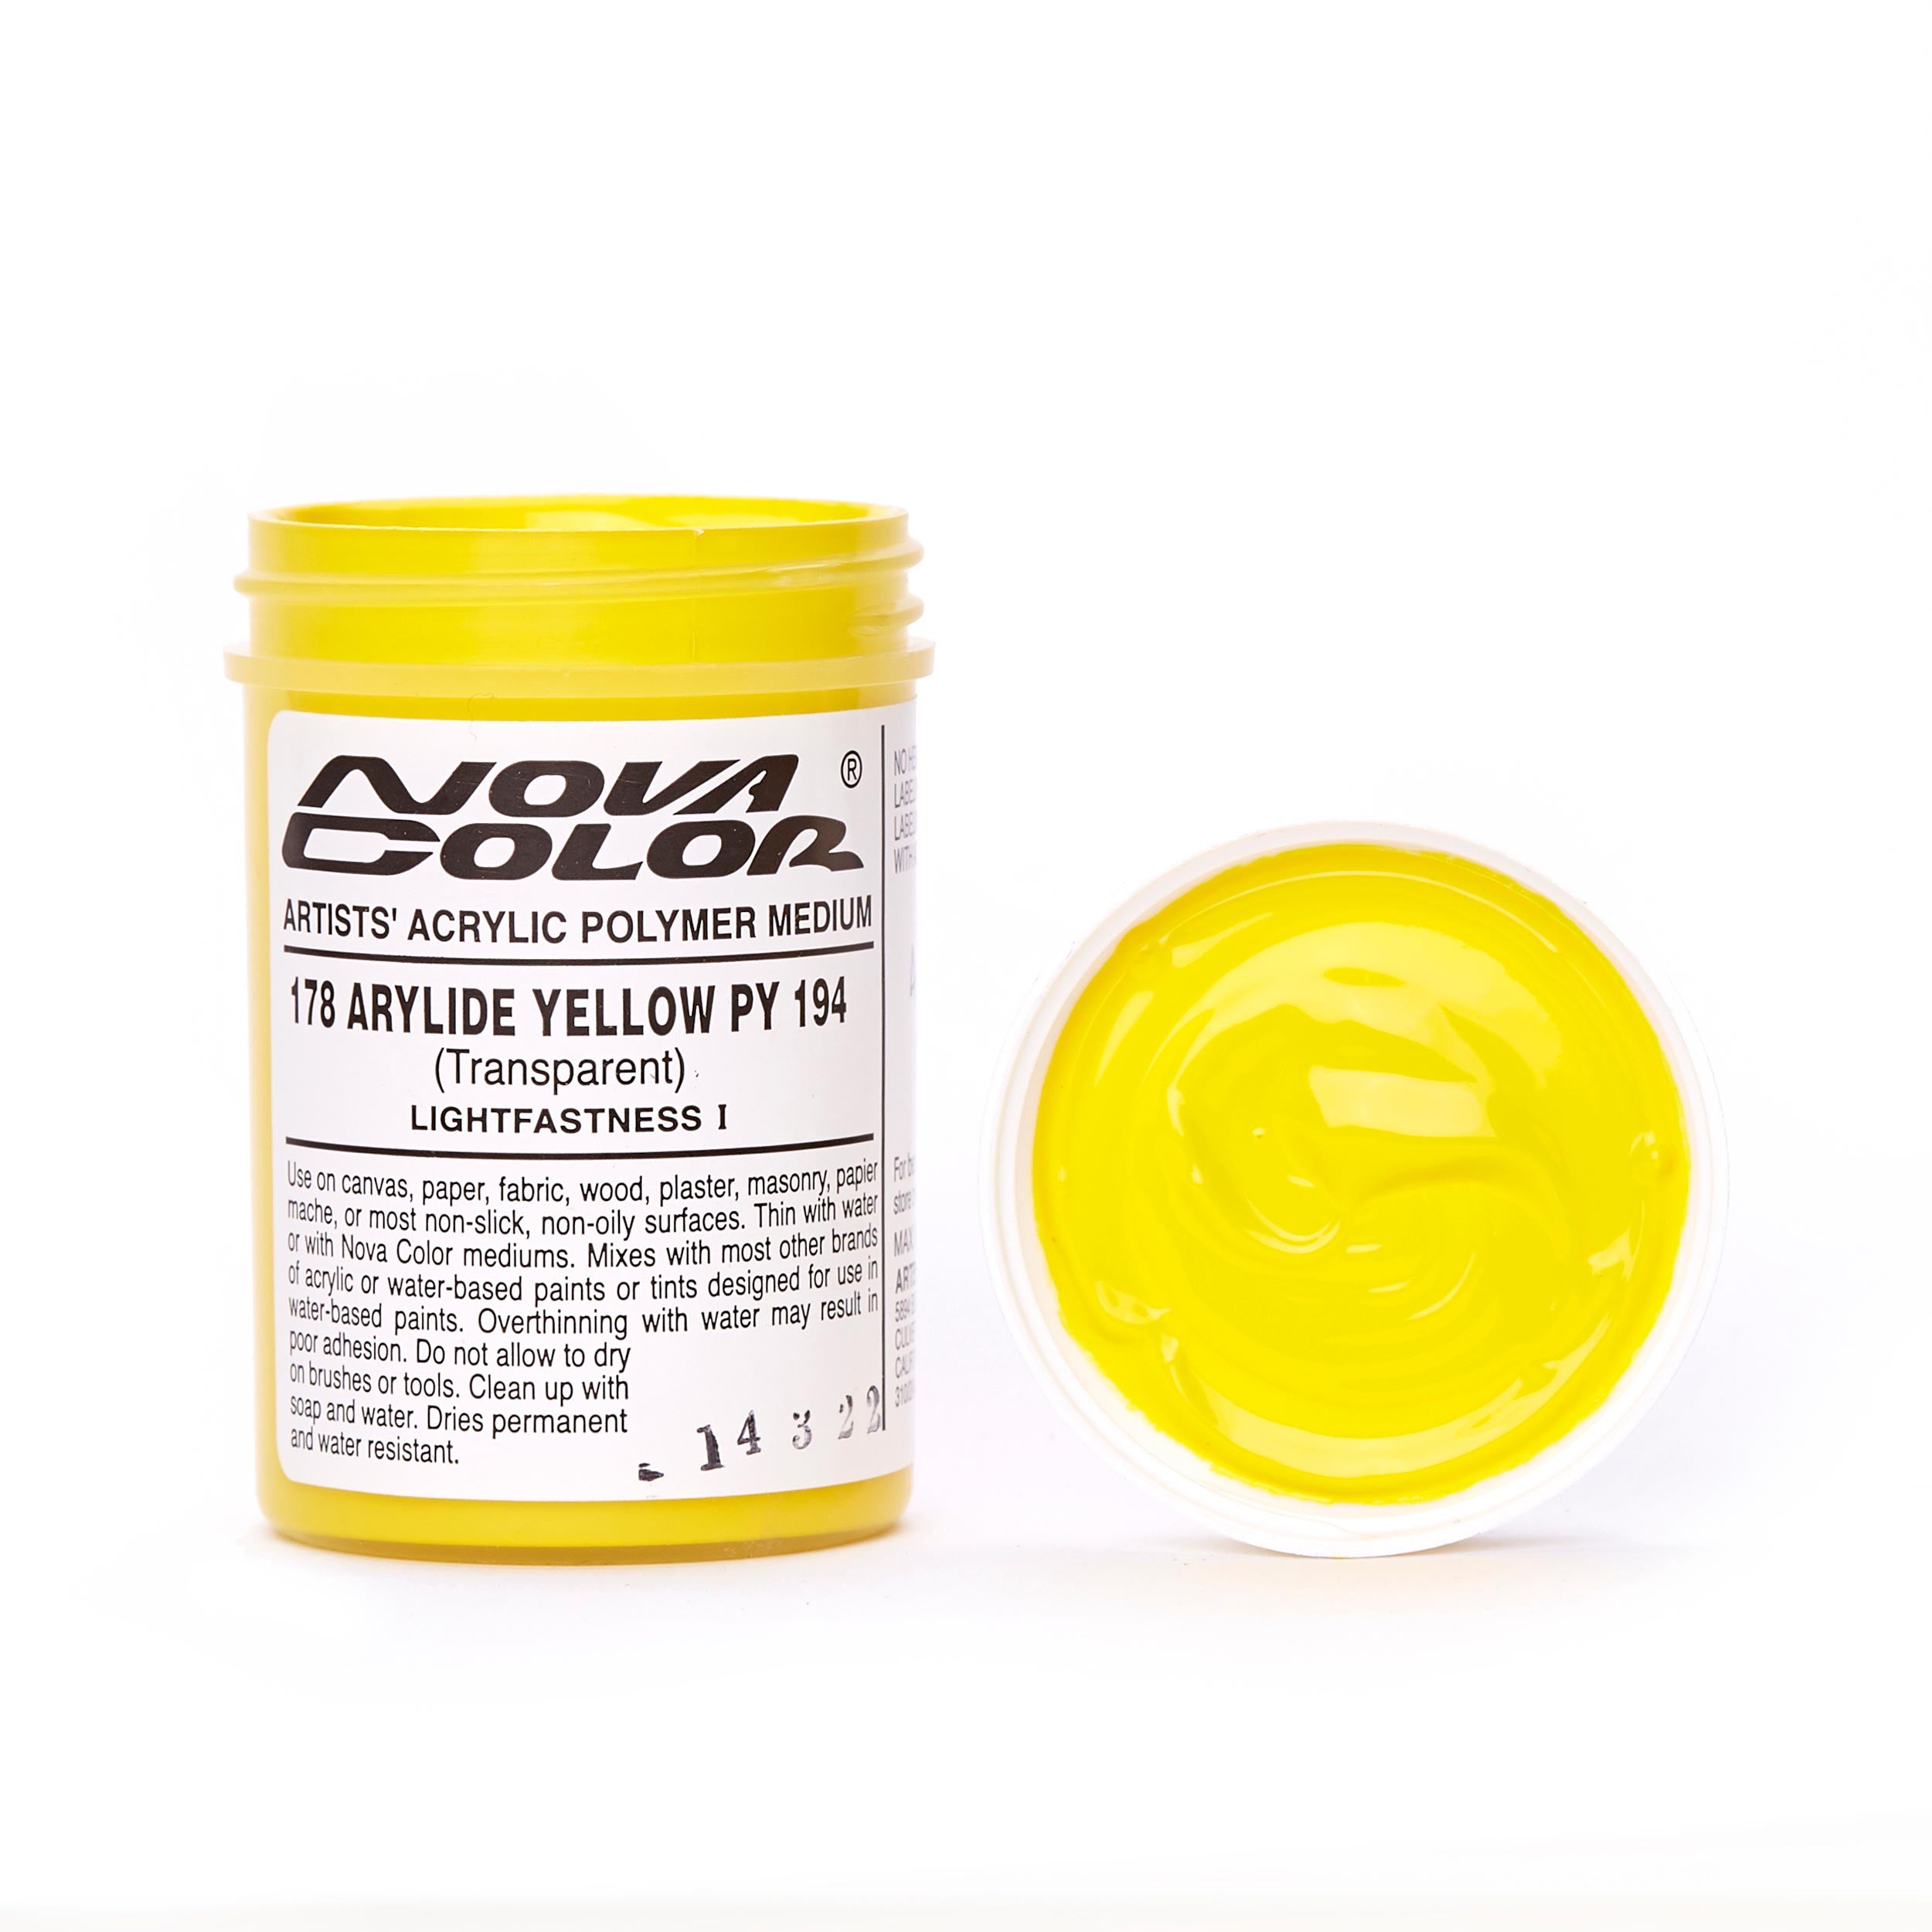 Buy #178 Arylide Yellow (PY 194) - Lightfastness:, - Transparent Online